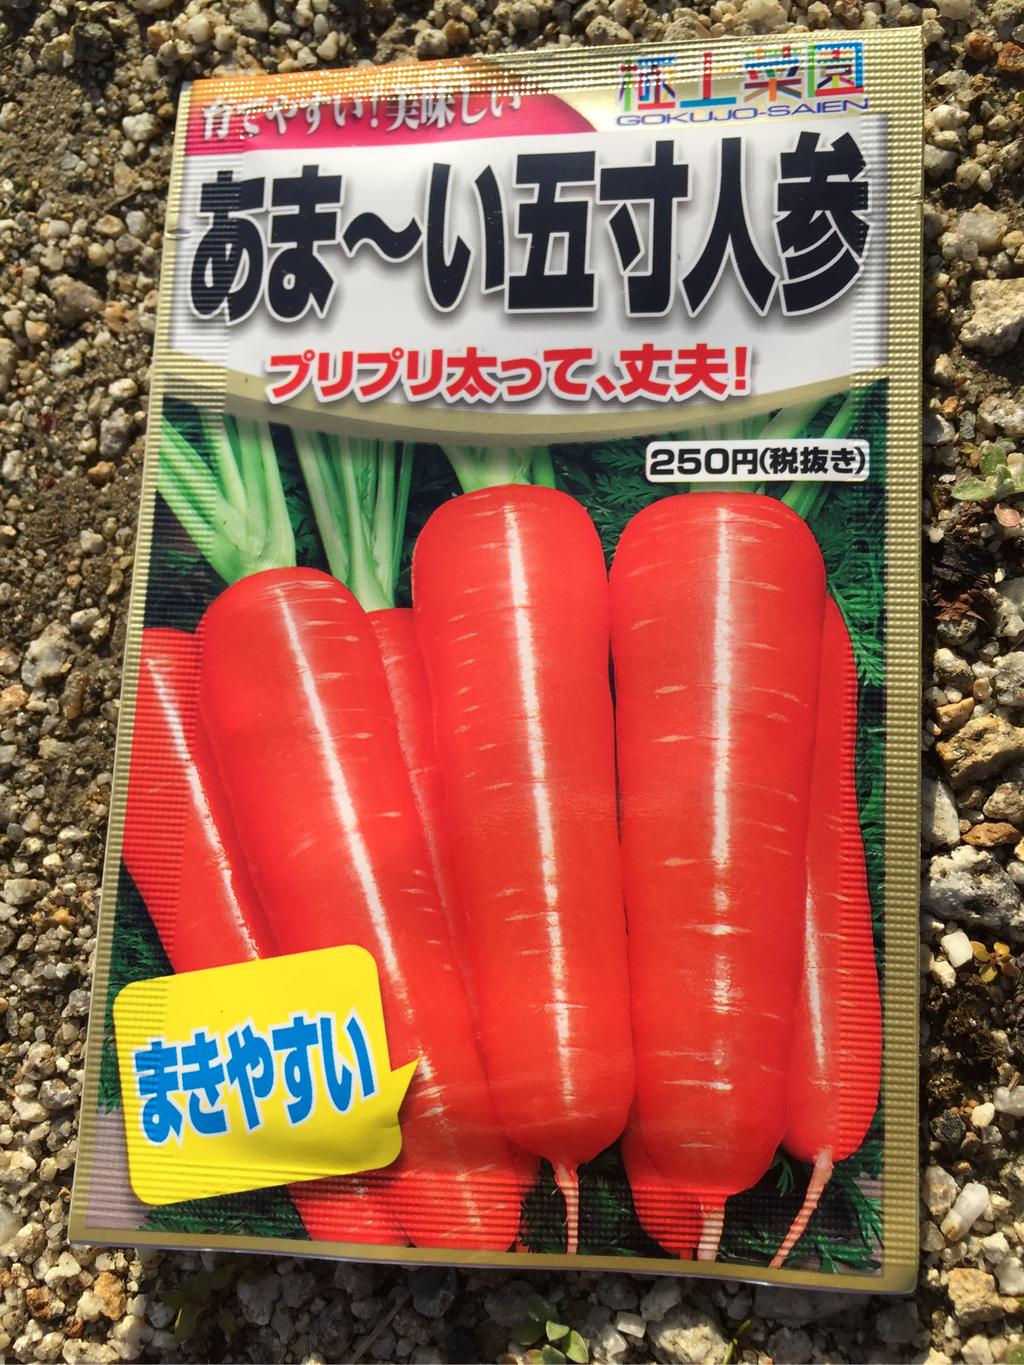 I sowed seeds of carrots at home garden